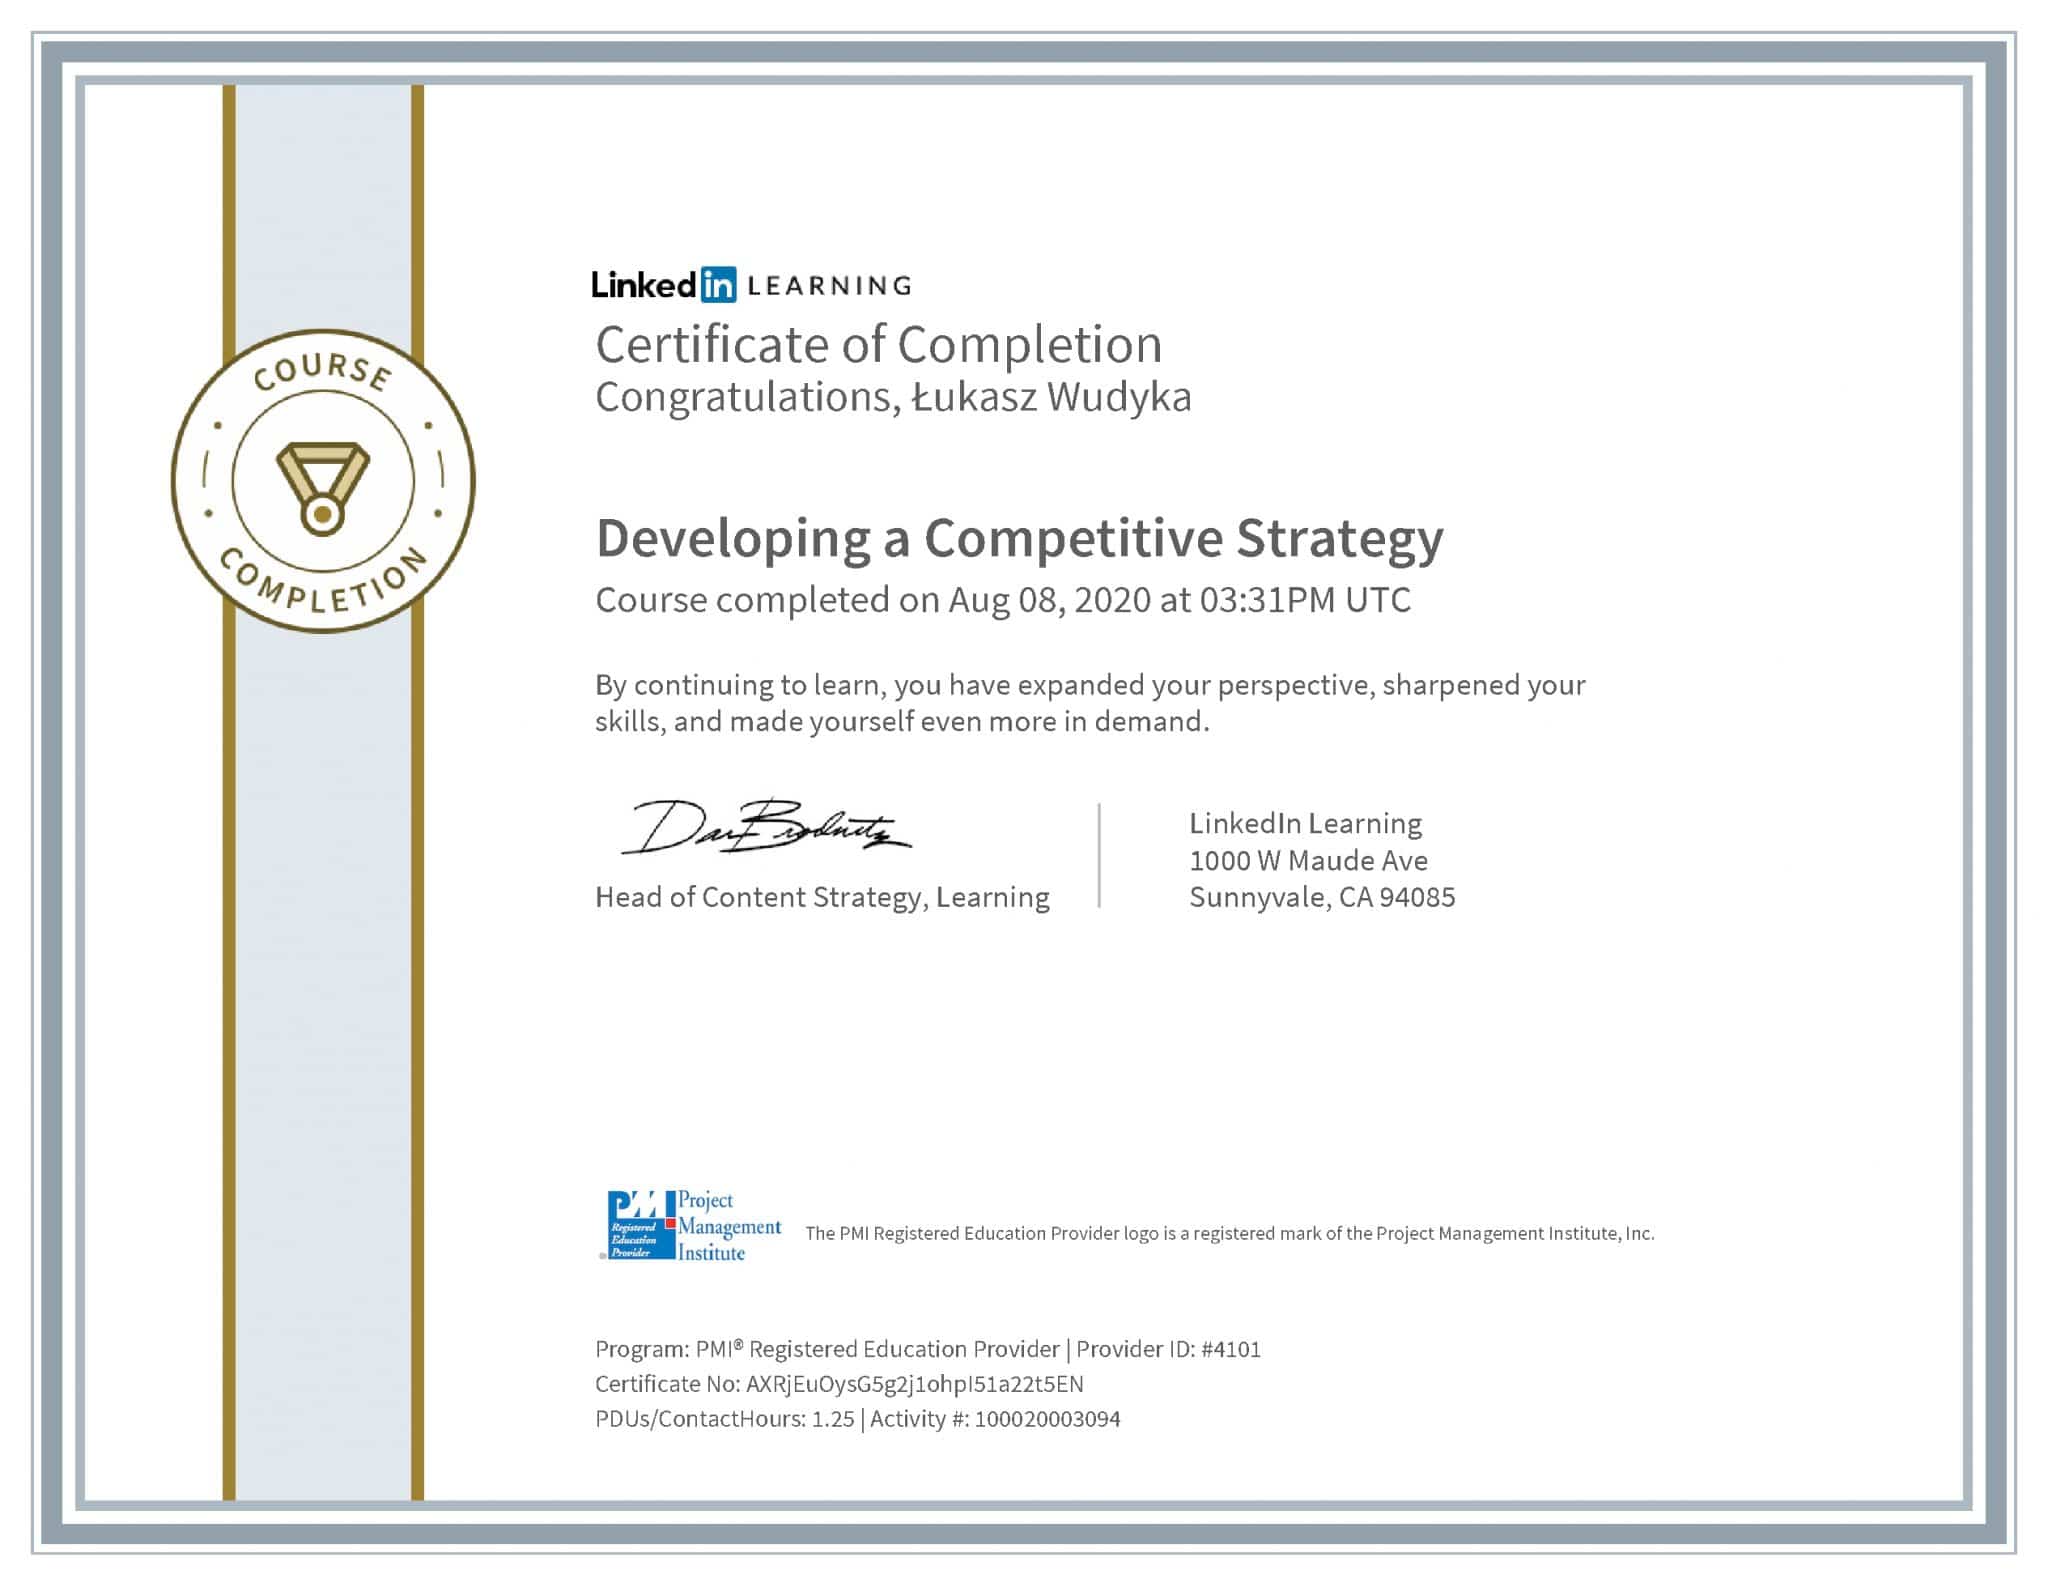 Łukasz Wudyka certyfikat LinkedIn Developing a Competitive Strategy PMI